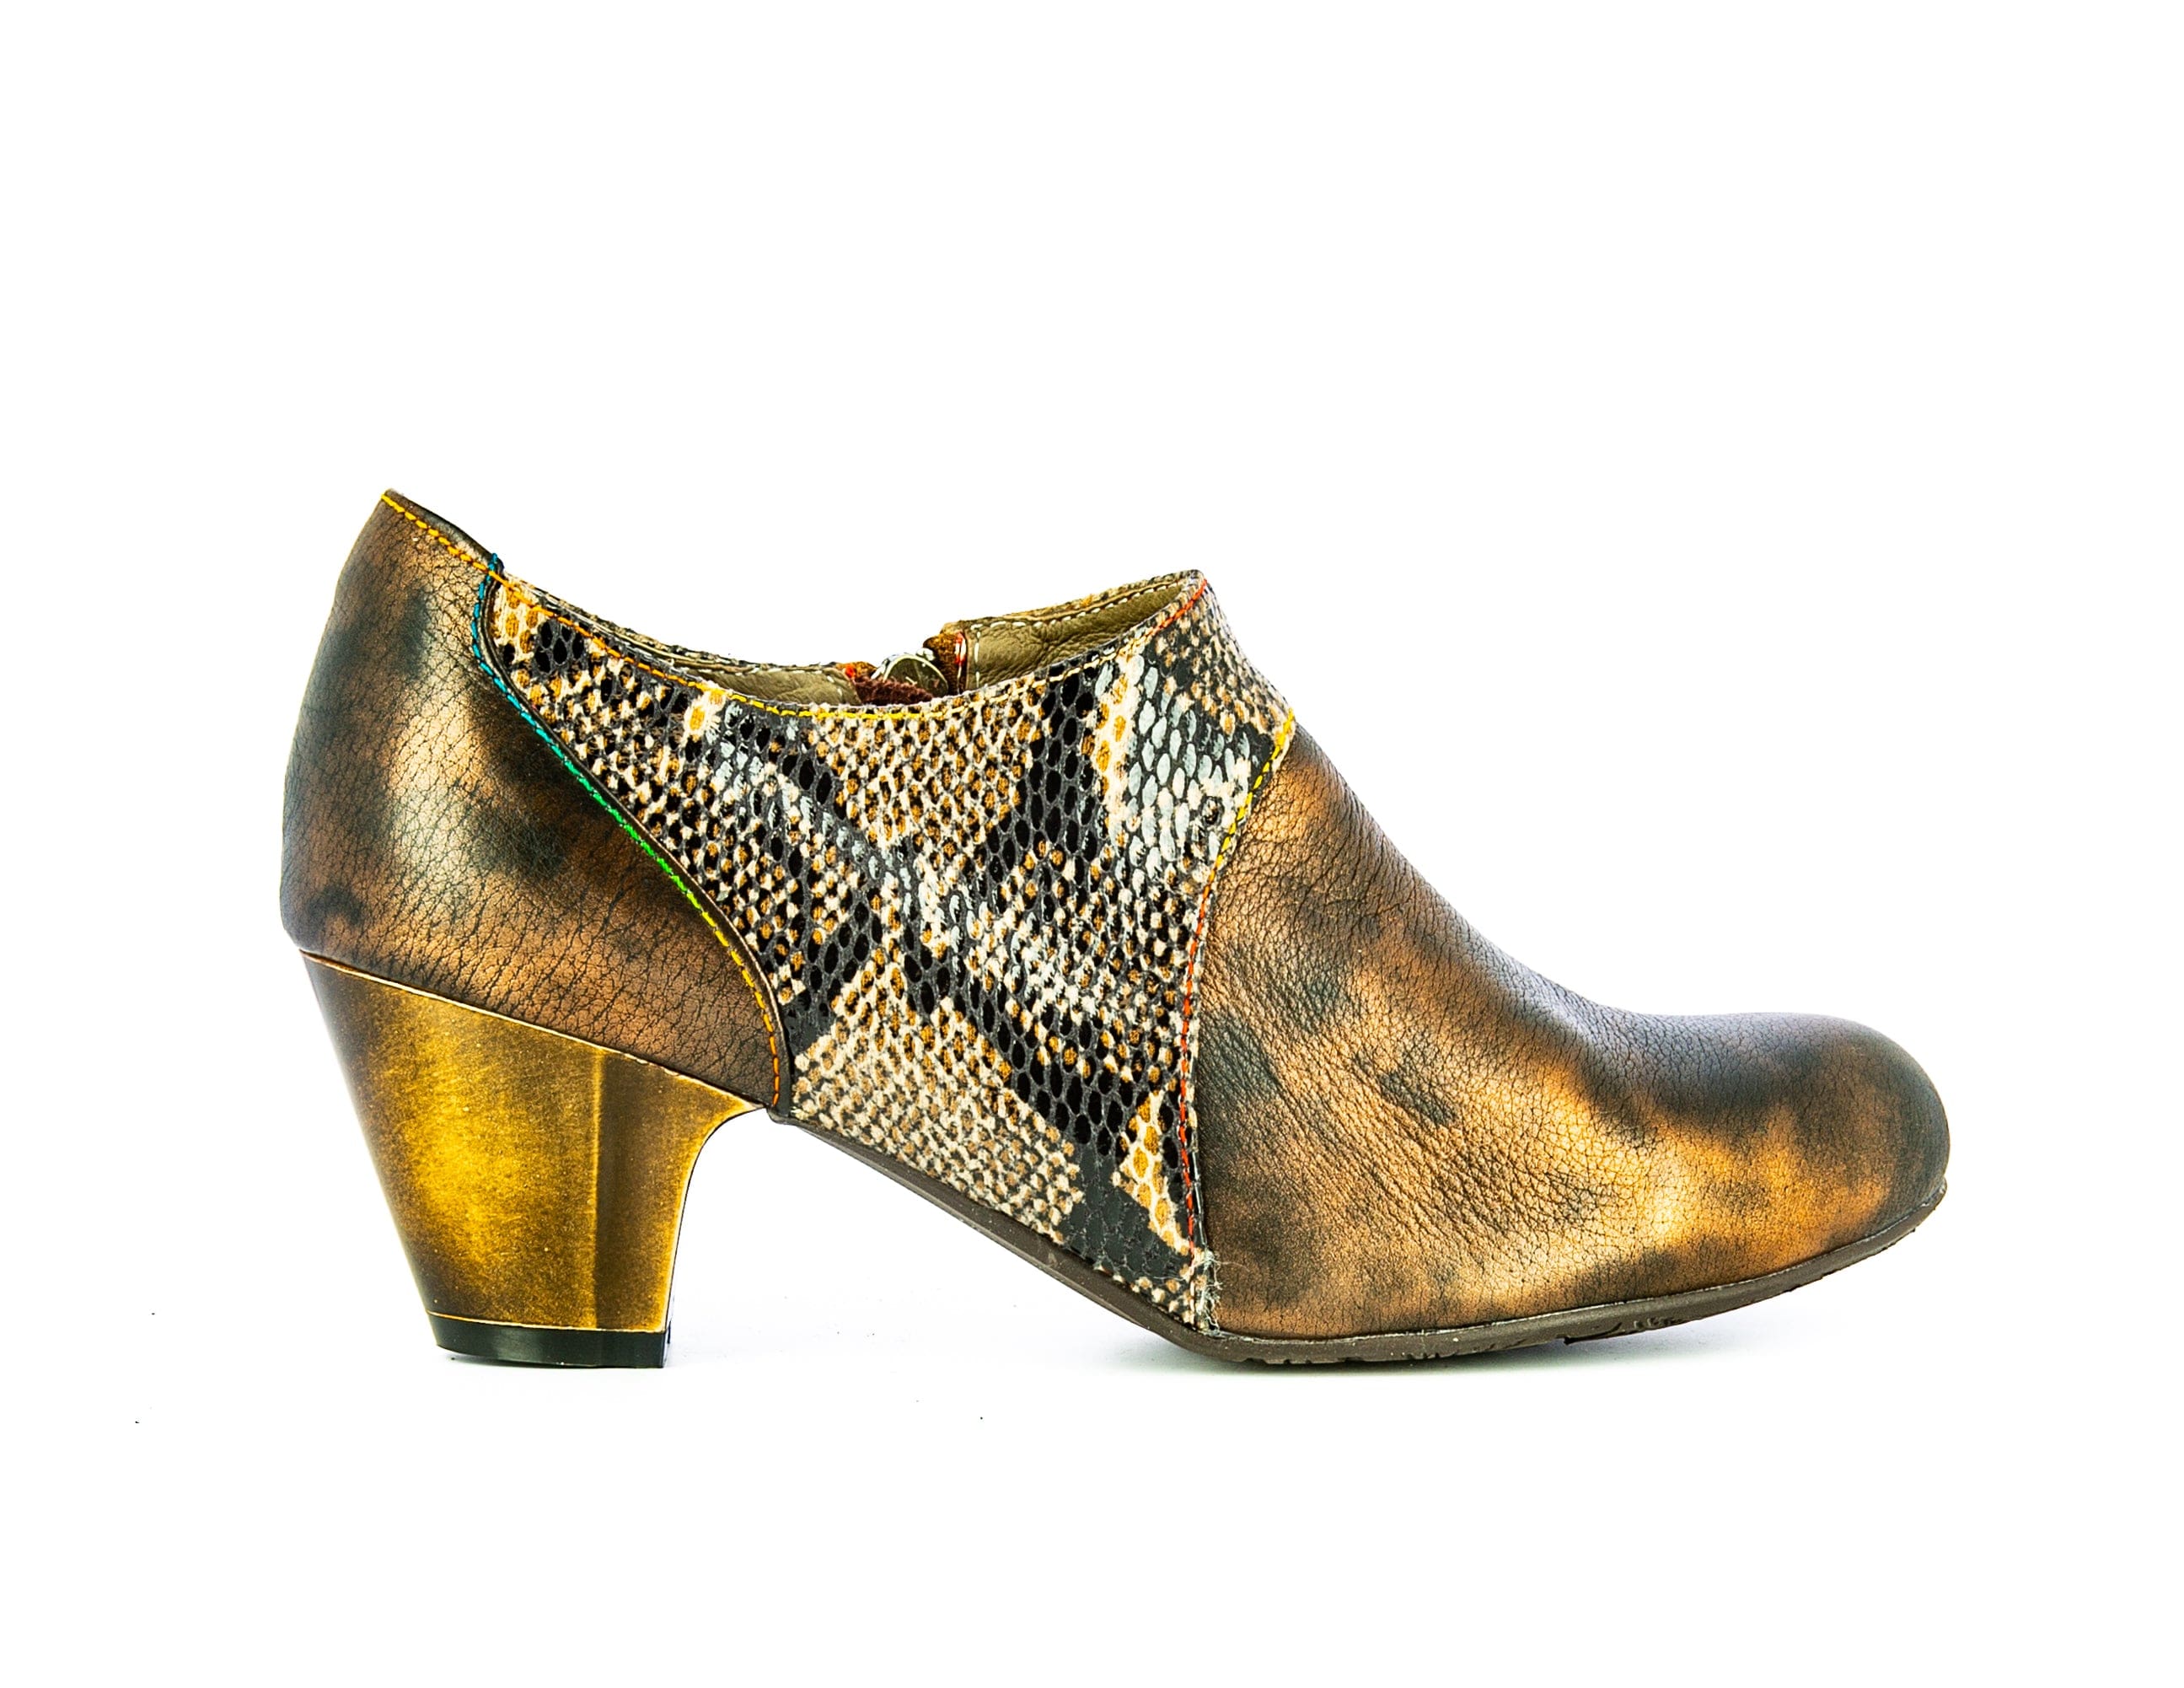 Chaussure ILCIAO 06 - 35 / Bronze - Mocassin